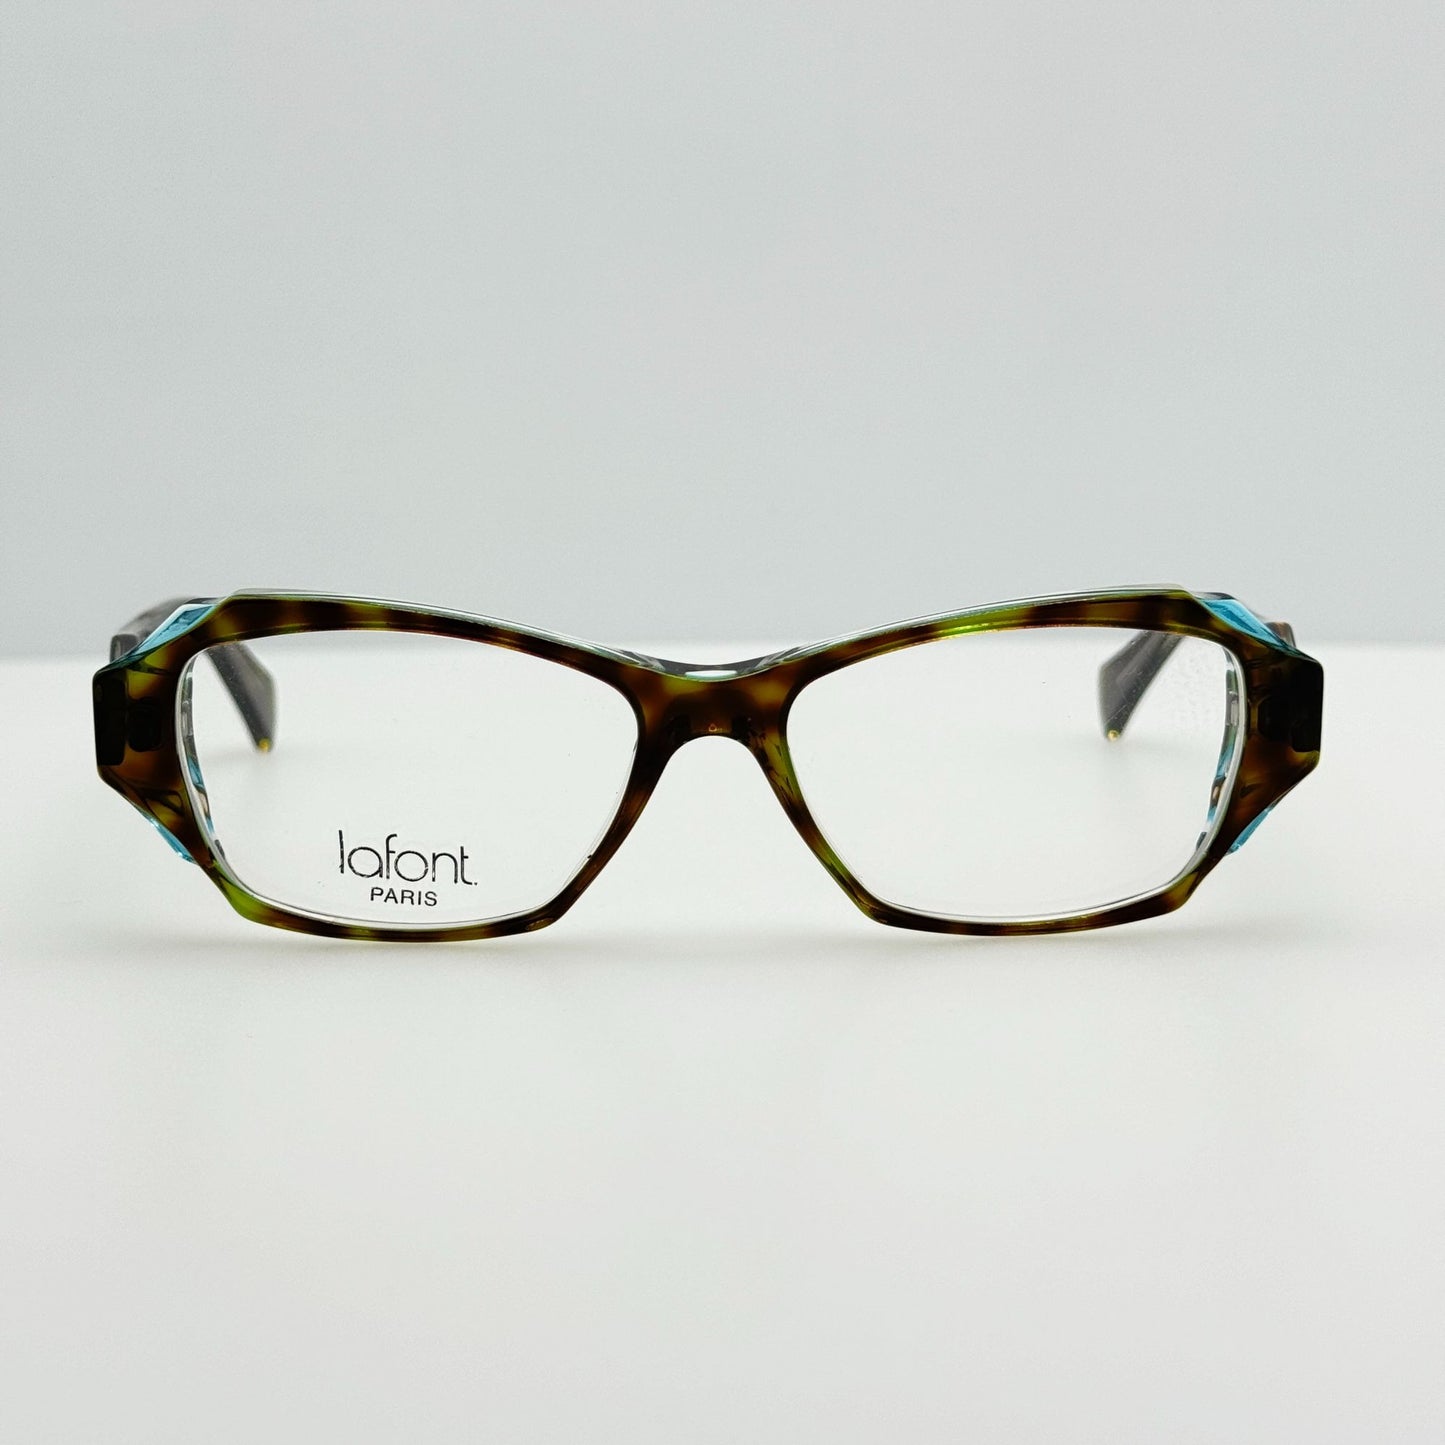 Jean Lafont Eyeglasses Eye Glasses Frames Gladys 675 France 51-14-140